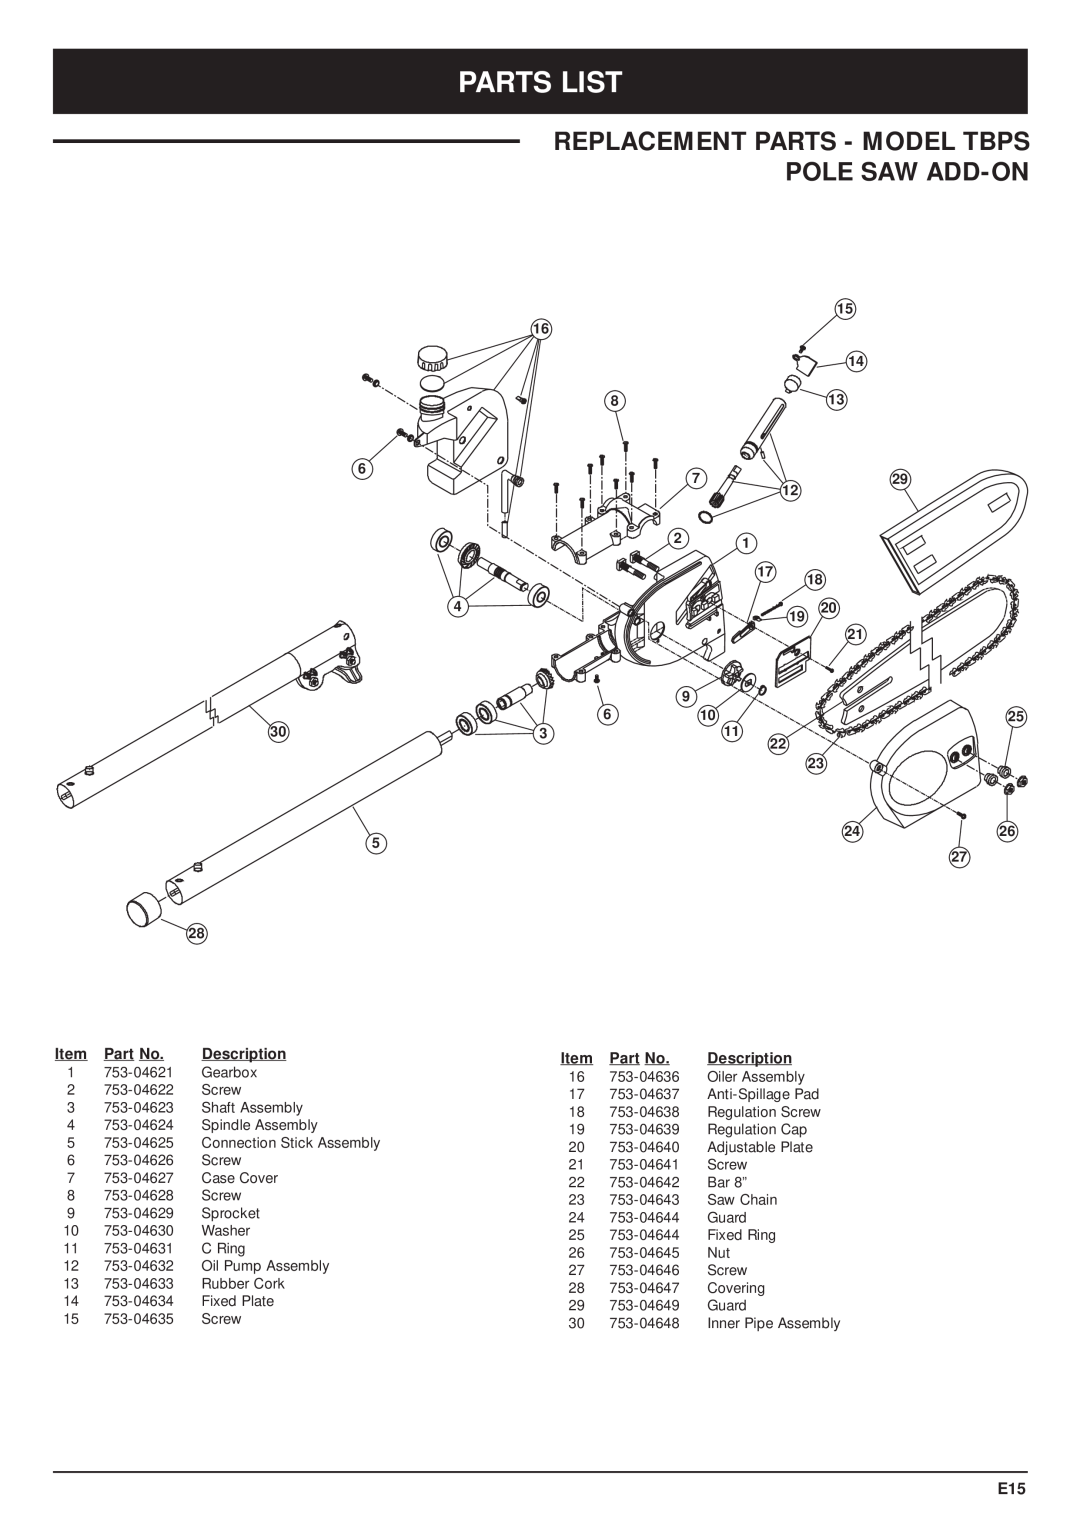 MTD TBPS manual Parts List, Replacement Parts - Model Tbps Pole Saw Add-On, Description 